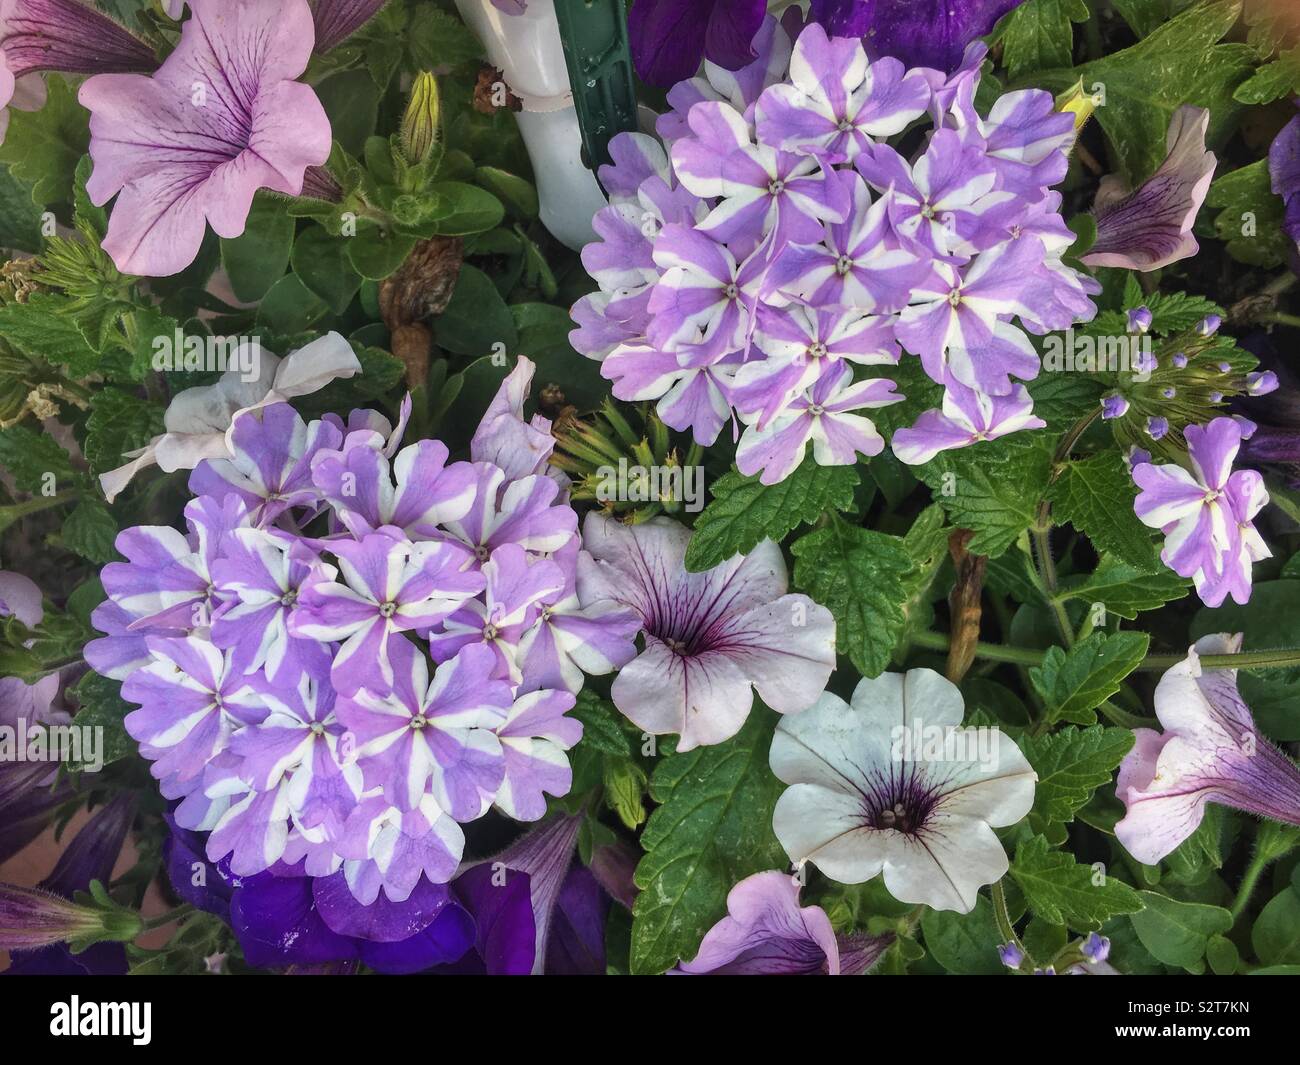 Assortment of purple flowers including striped hydrangeas and pretty petunias. Stock Photo